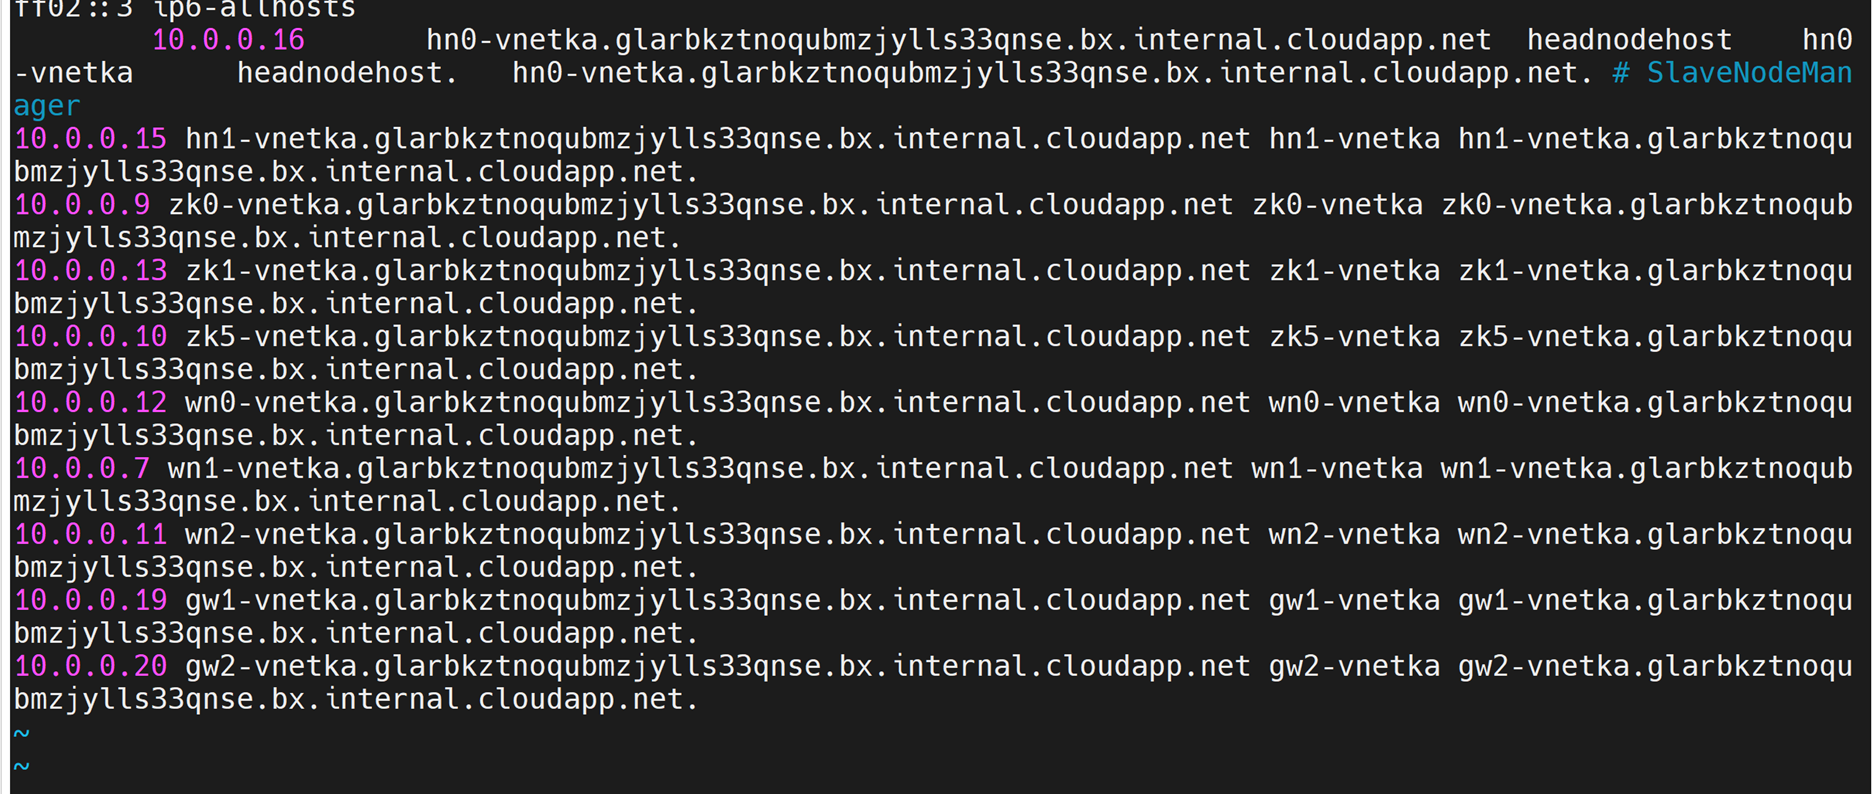 Screenshot showing host file output.